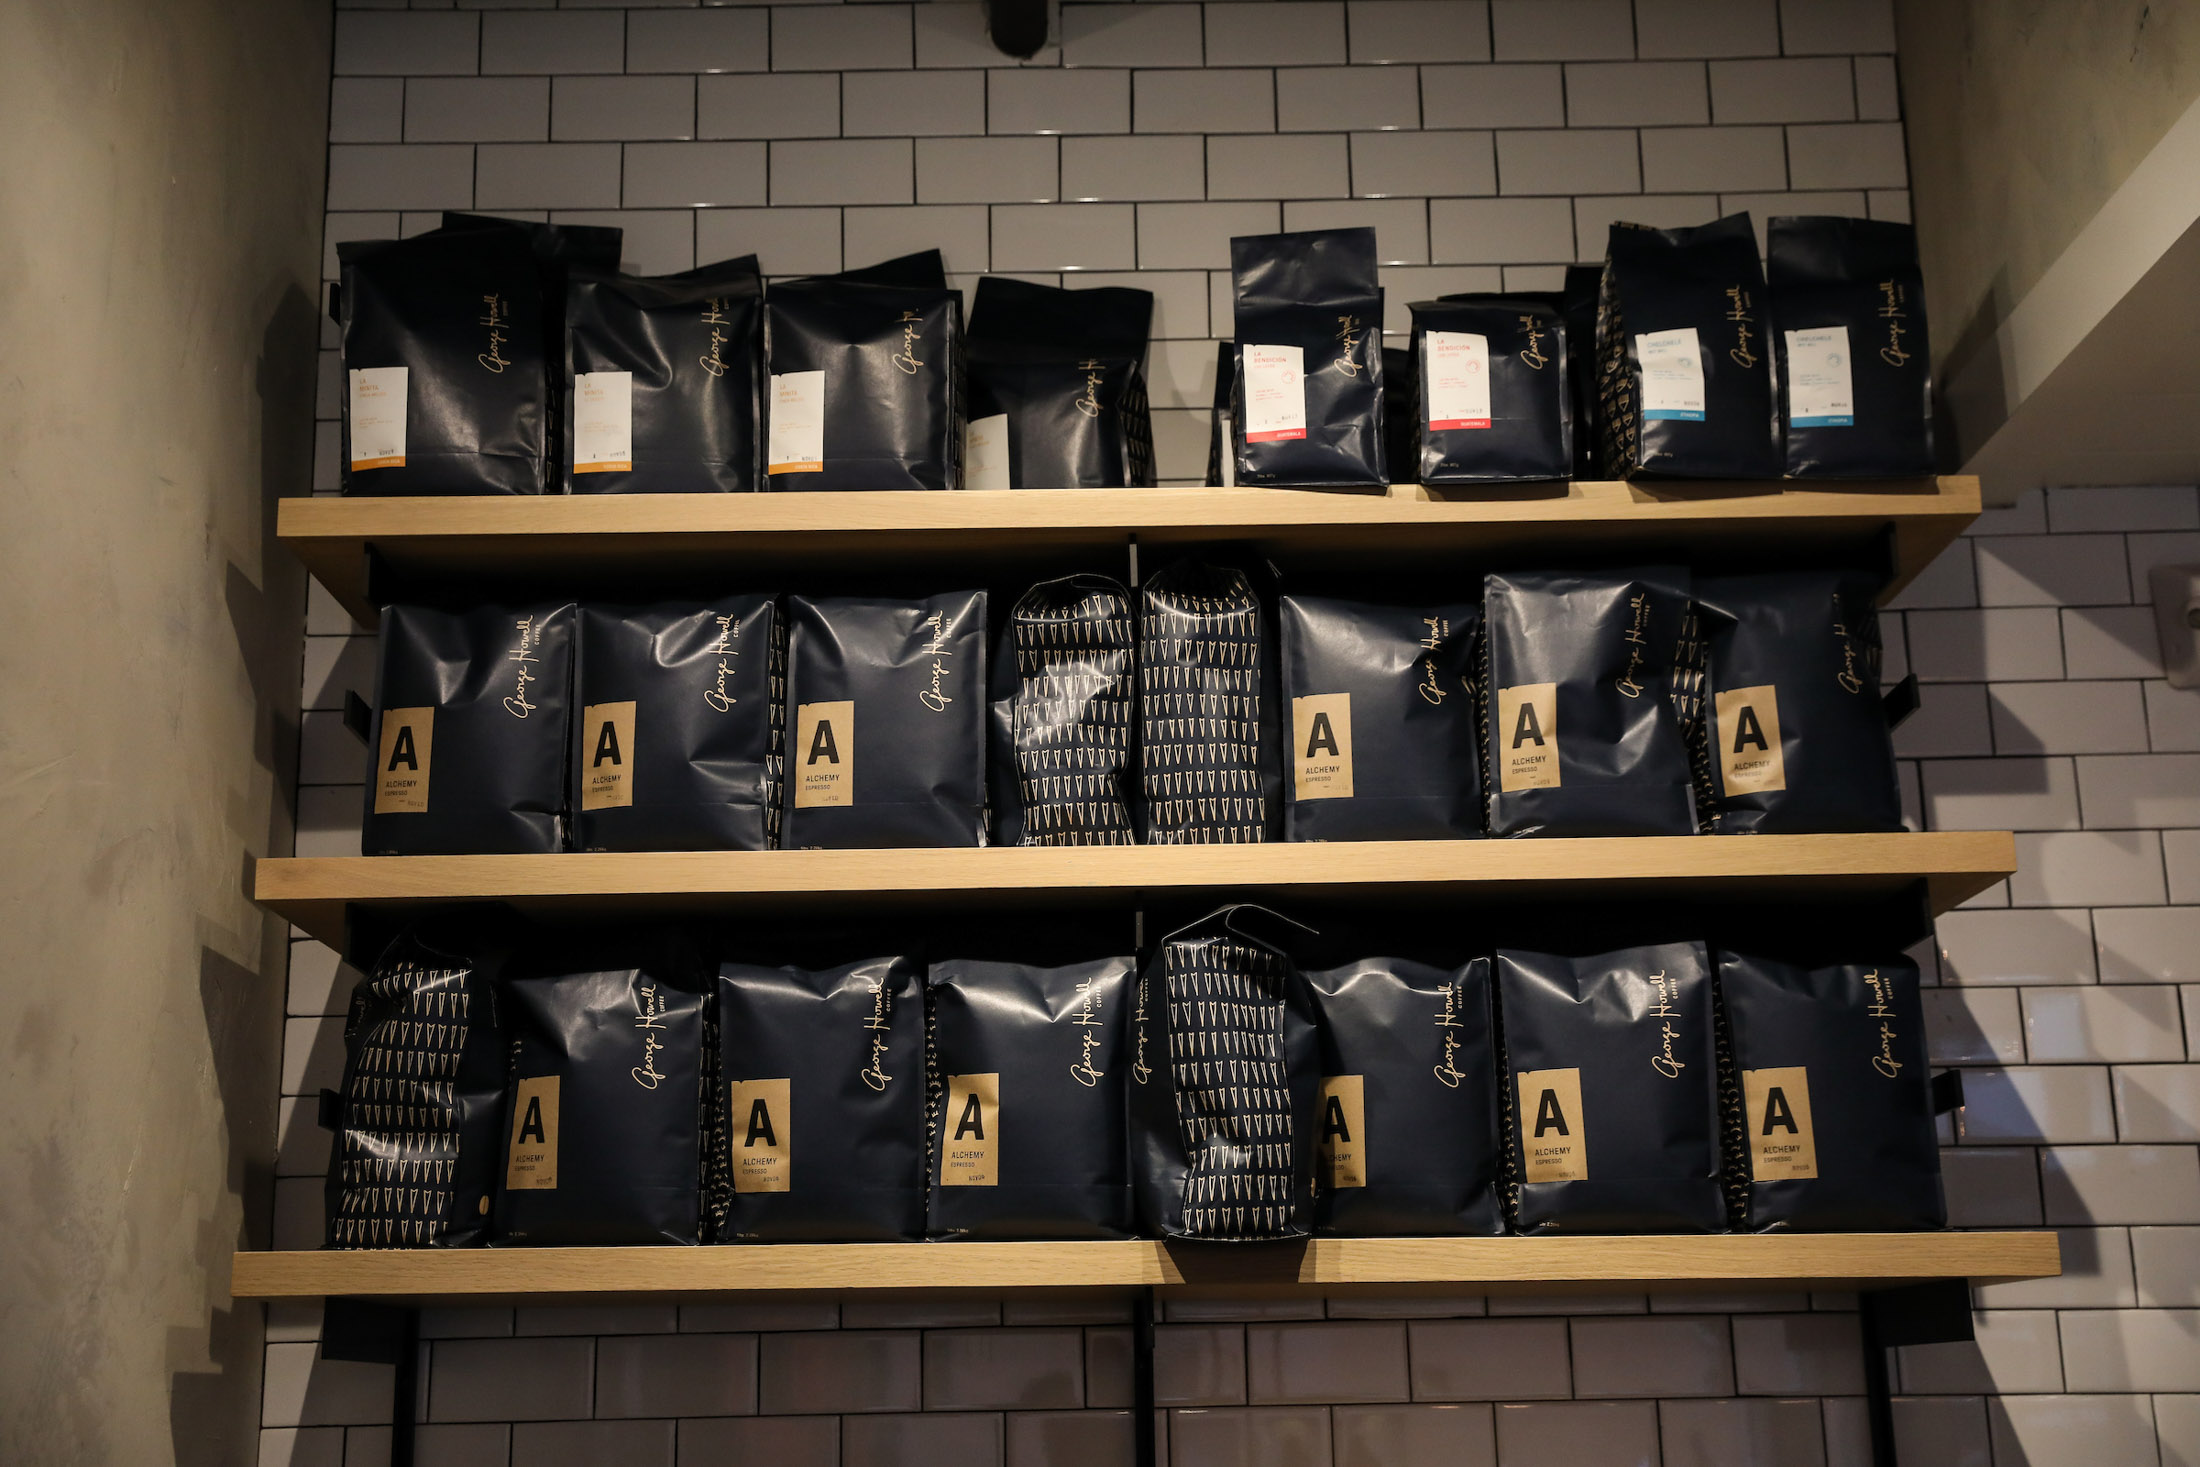 Bags of Coffee on a shelf